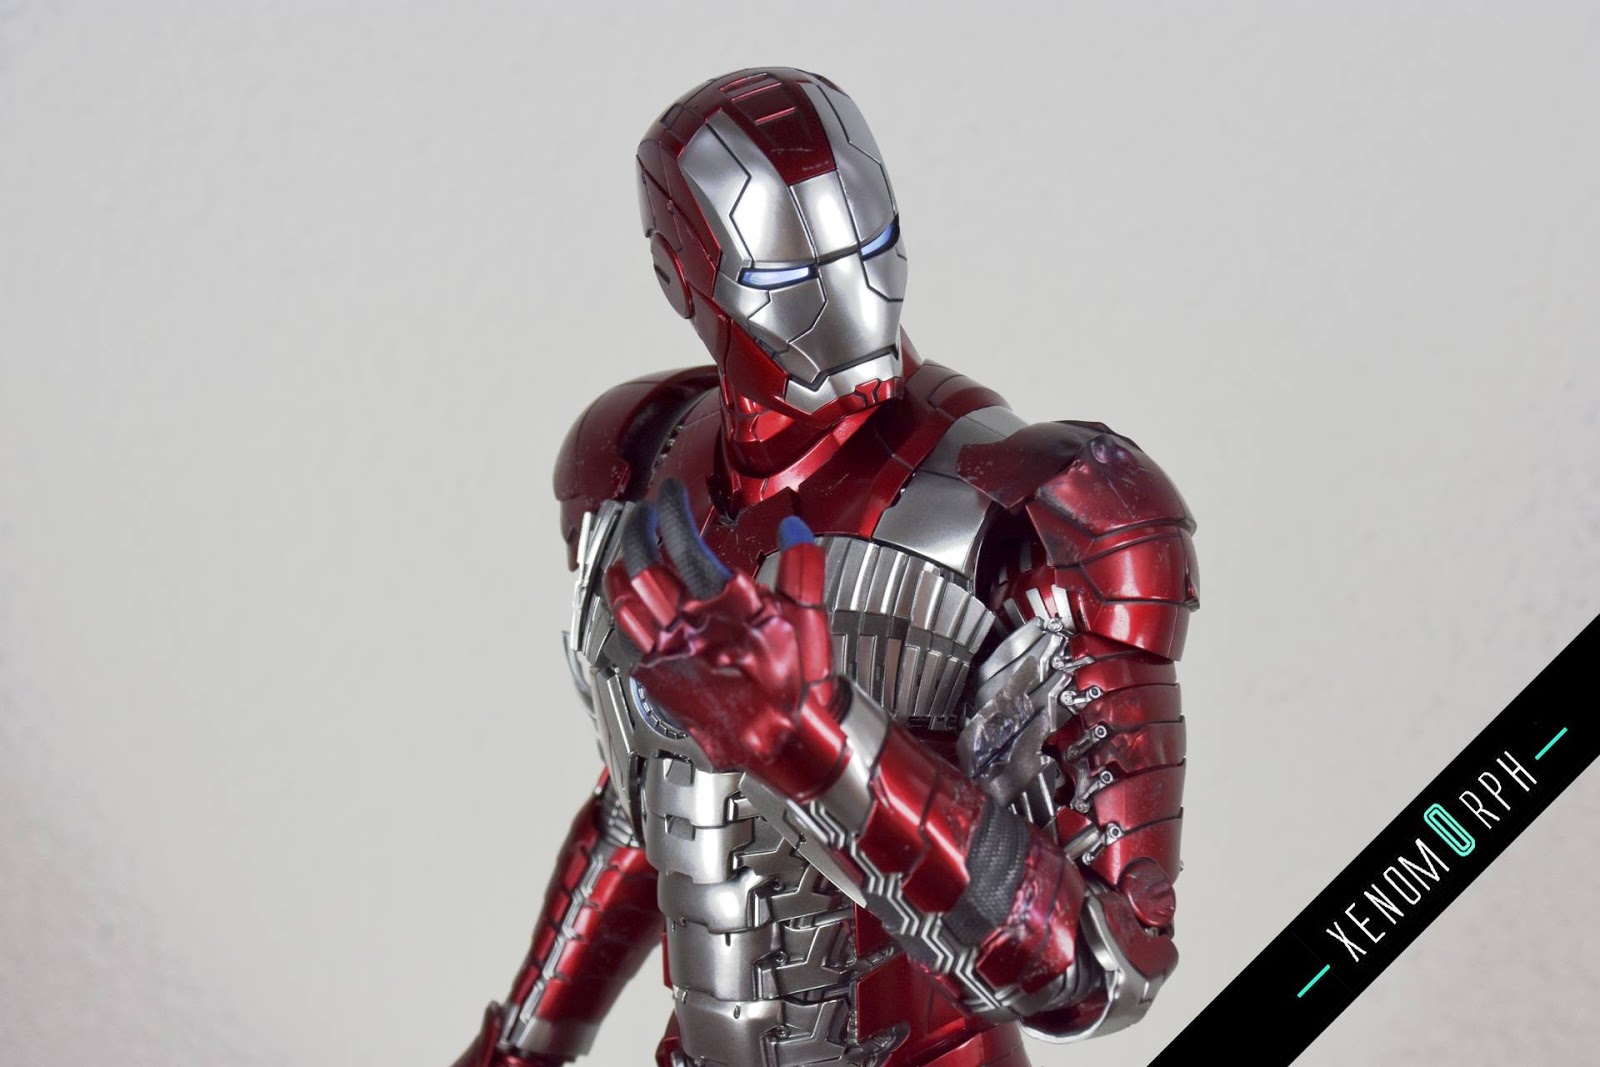 Hot Toys Iron man Mark 5. Your mark 5